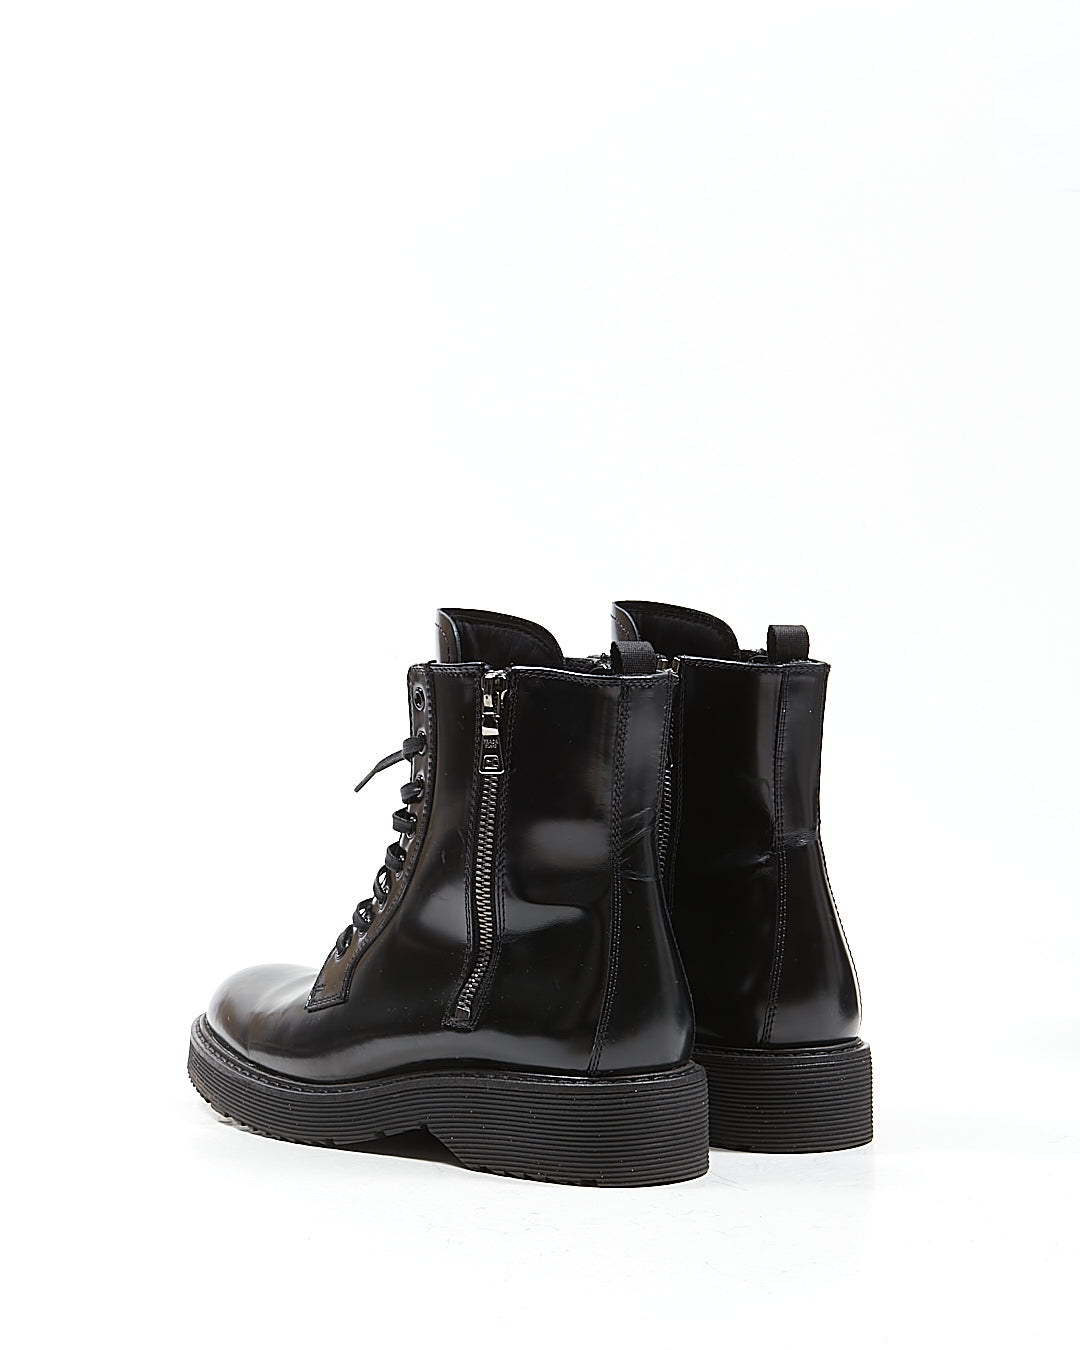 Prada Black Shiny Leather Combat Zip Lace Up Boots - 38.5